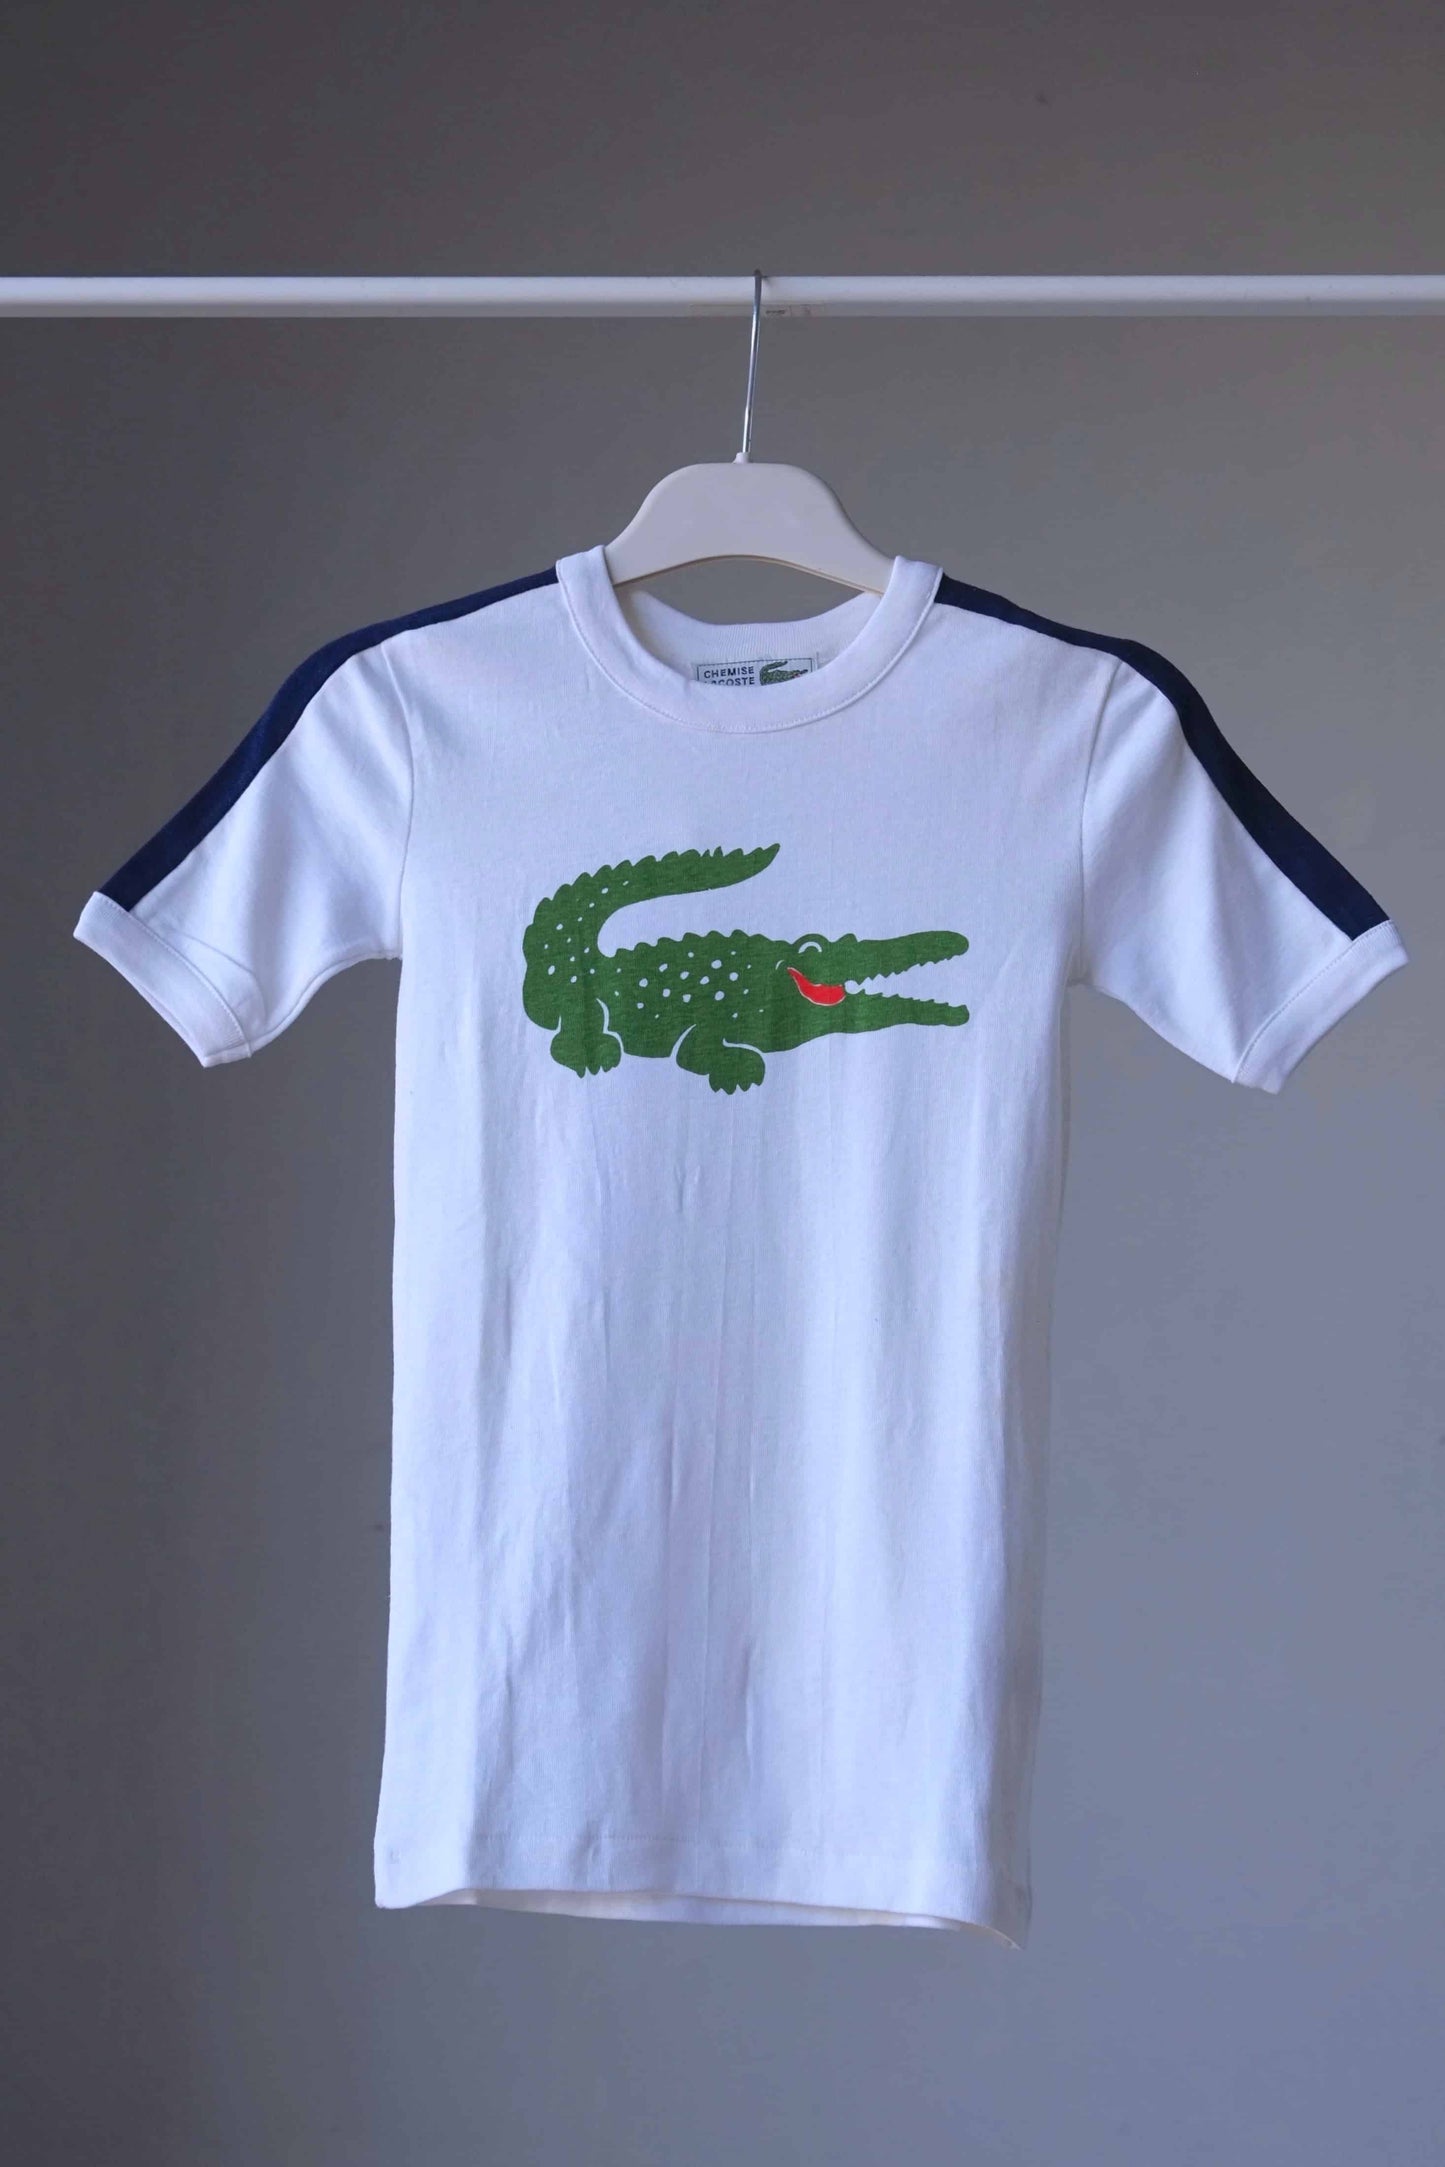 LACOSTE Crocodile Logo T-shirt in white on hanger